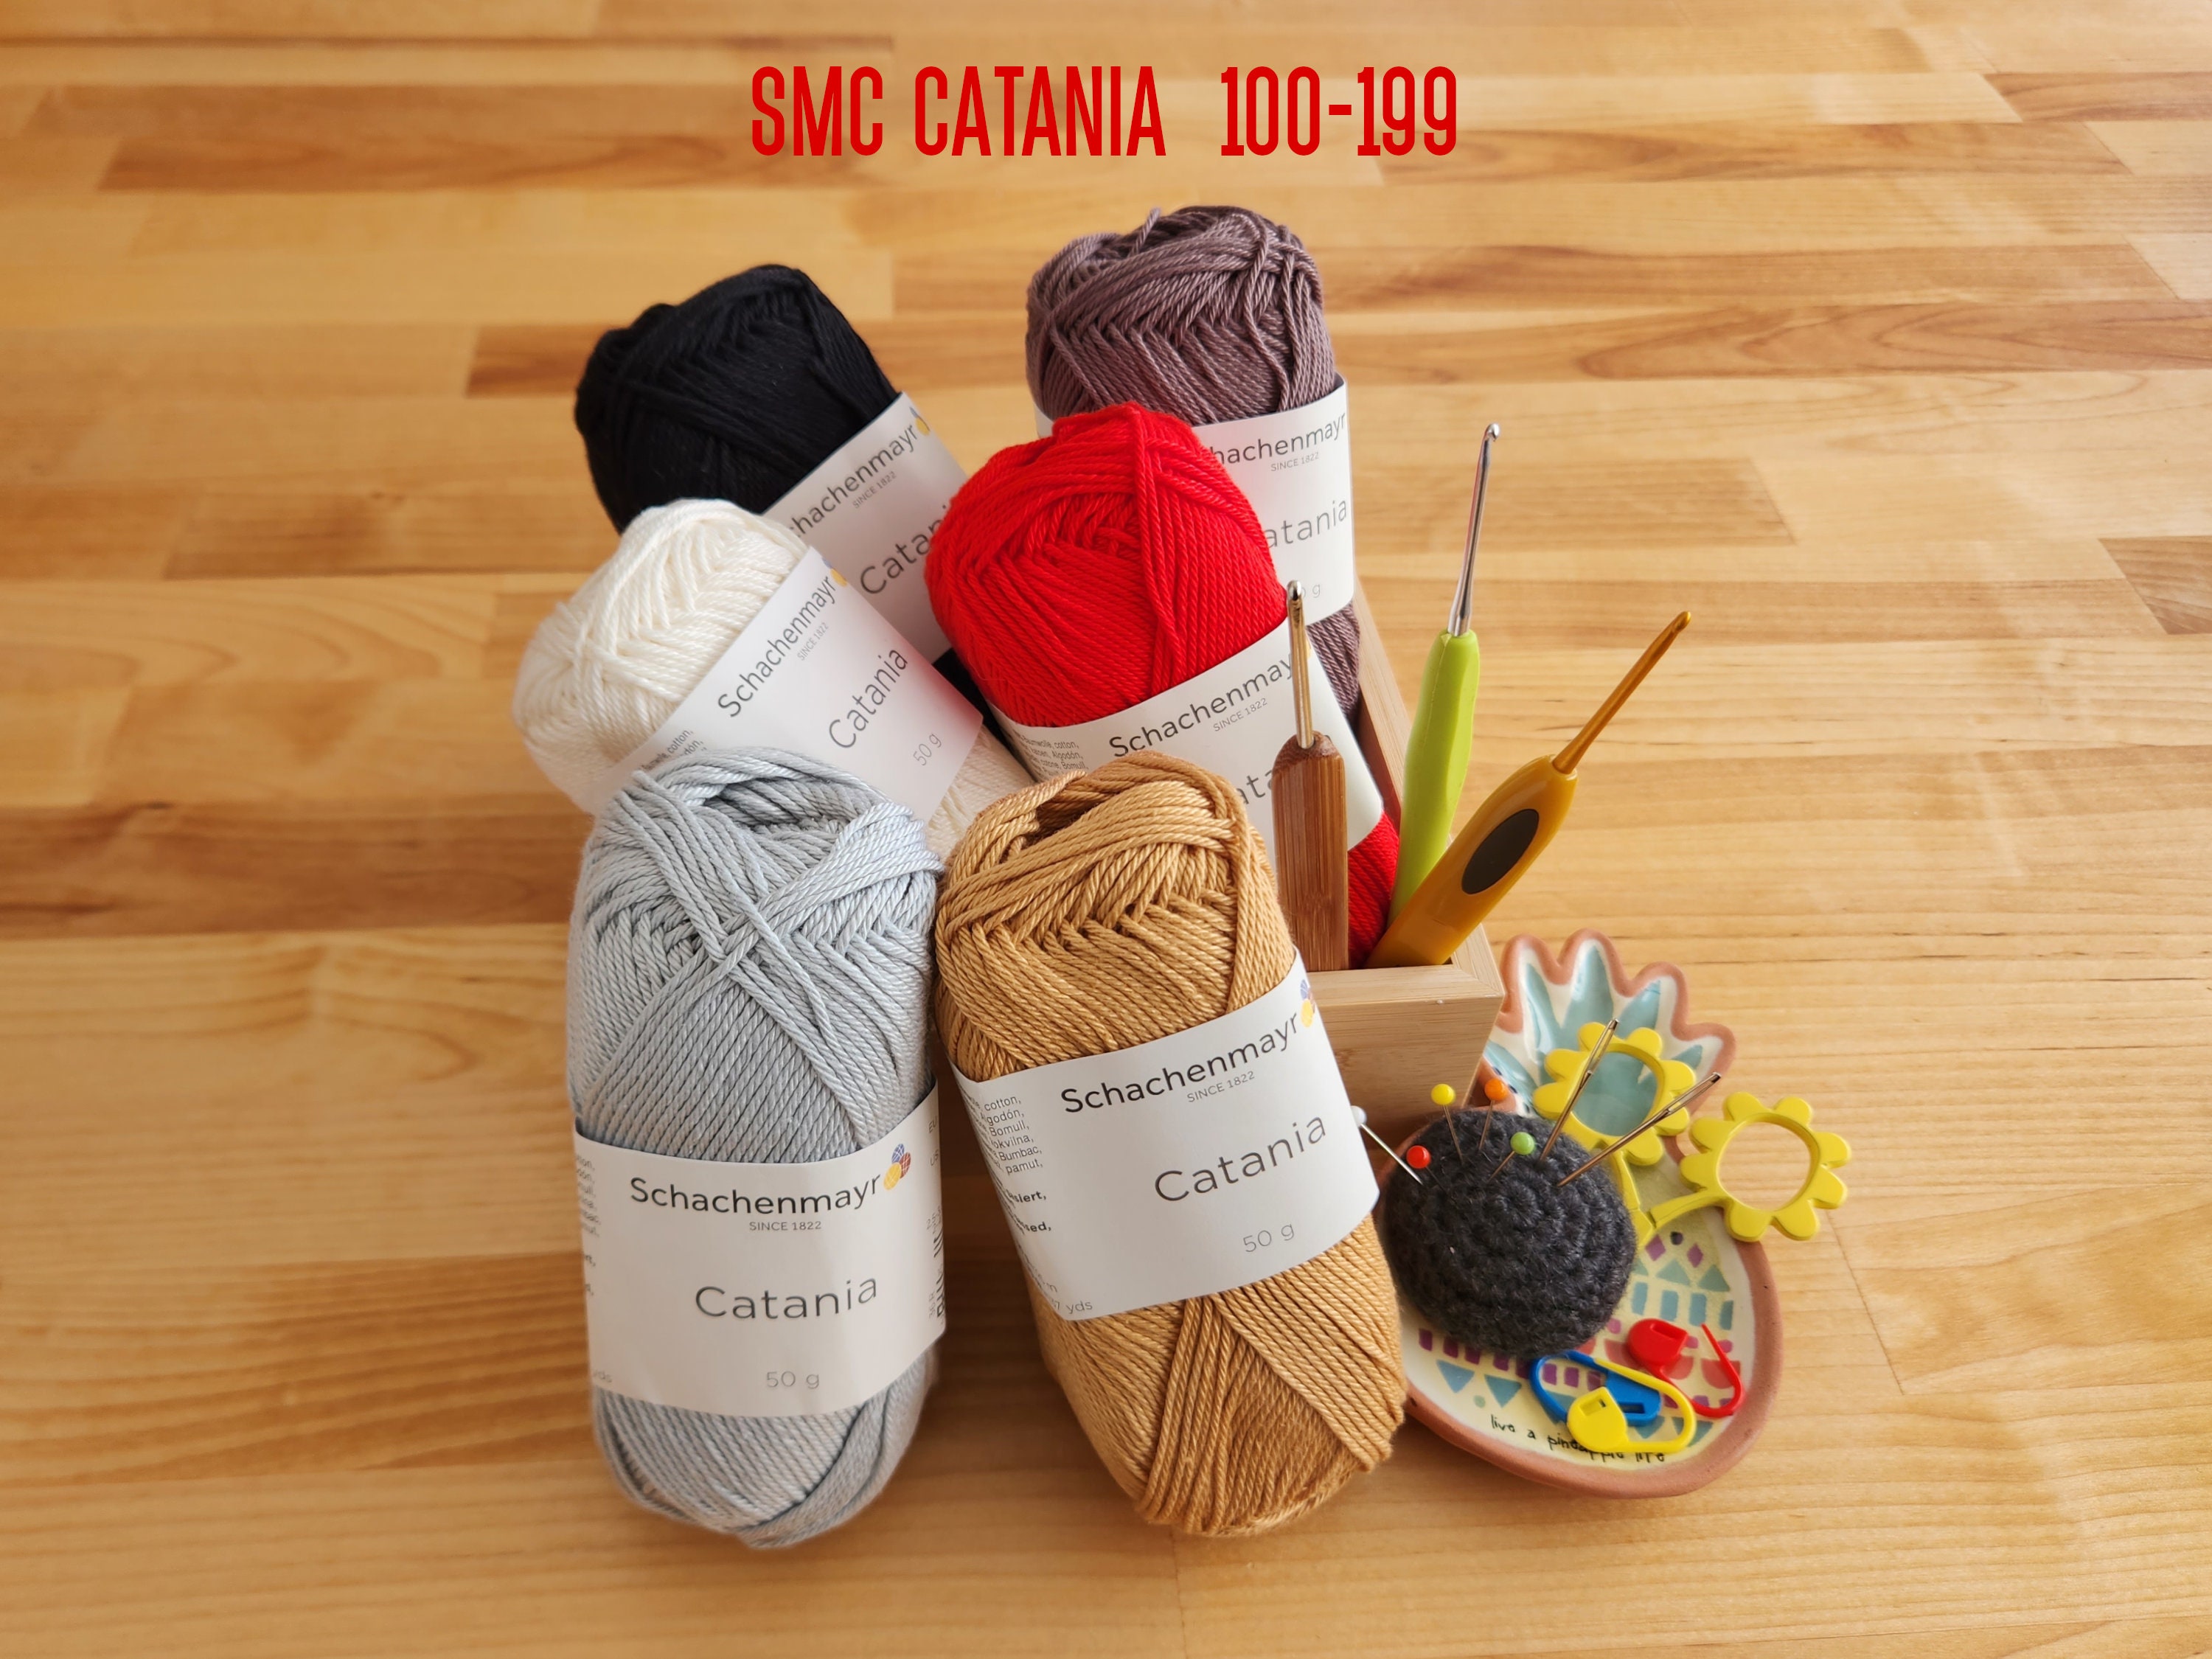 Metallic Gold Yarn Premium, Glossing Thread, Knitting Yarn, Metallic Yarn  for Bags, Polyester Yarn, DIY Crochet Basket 